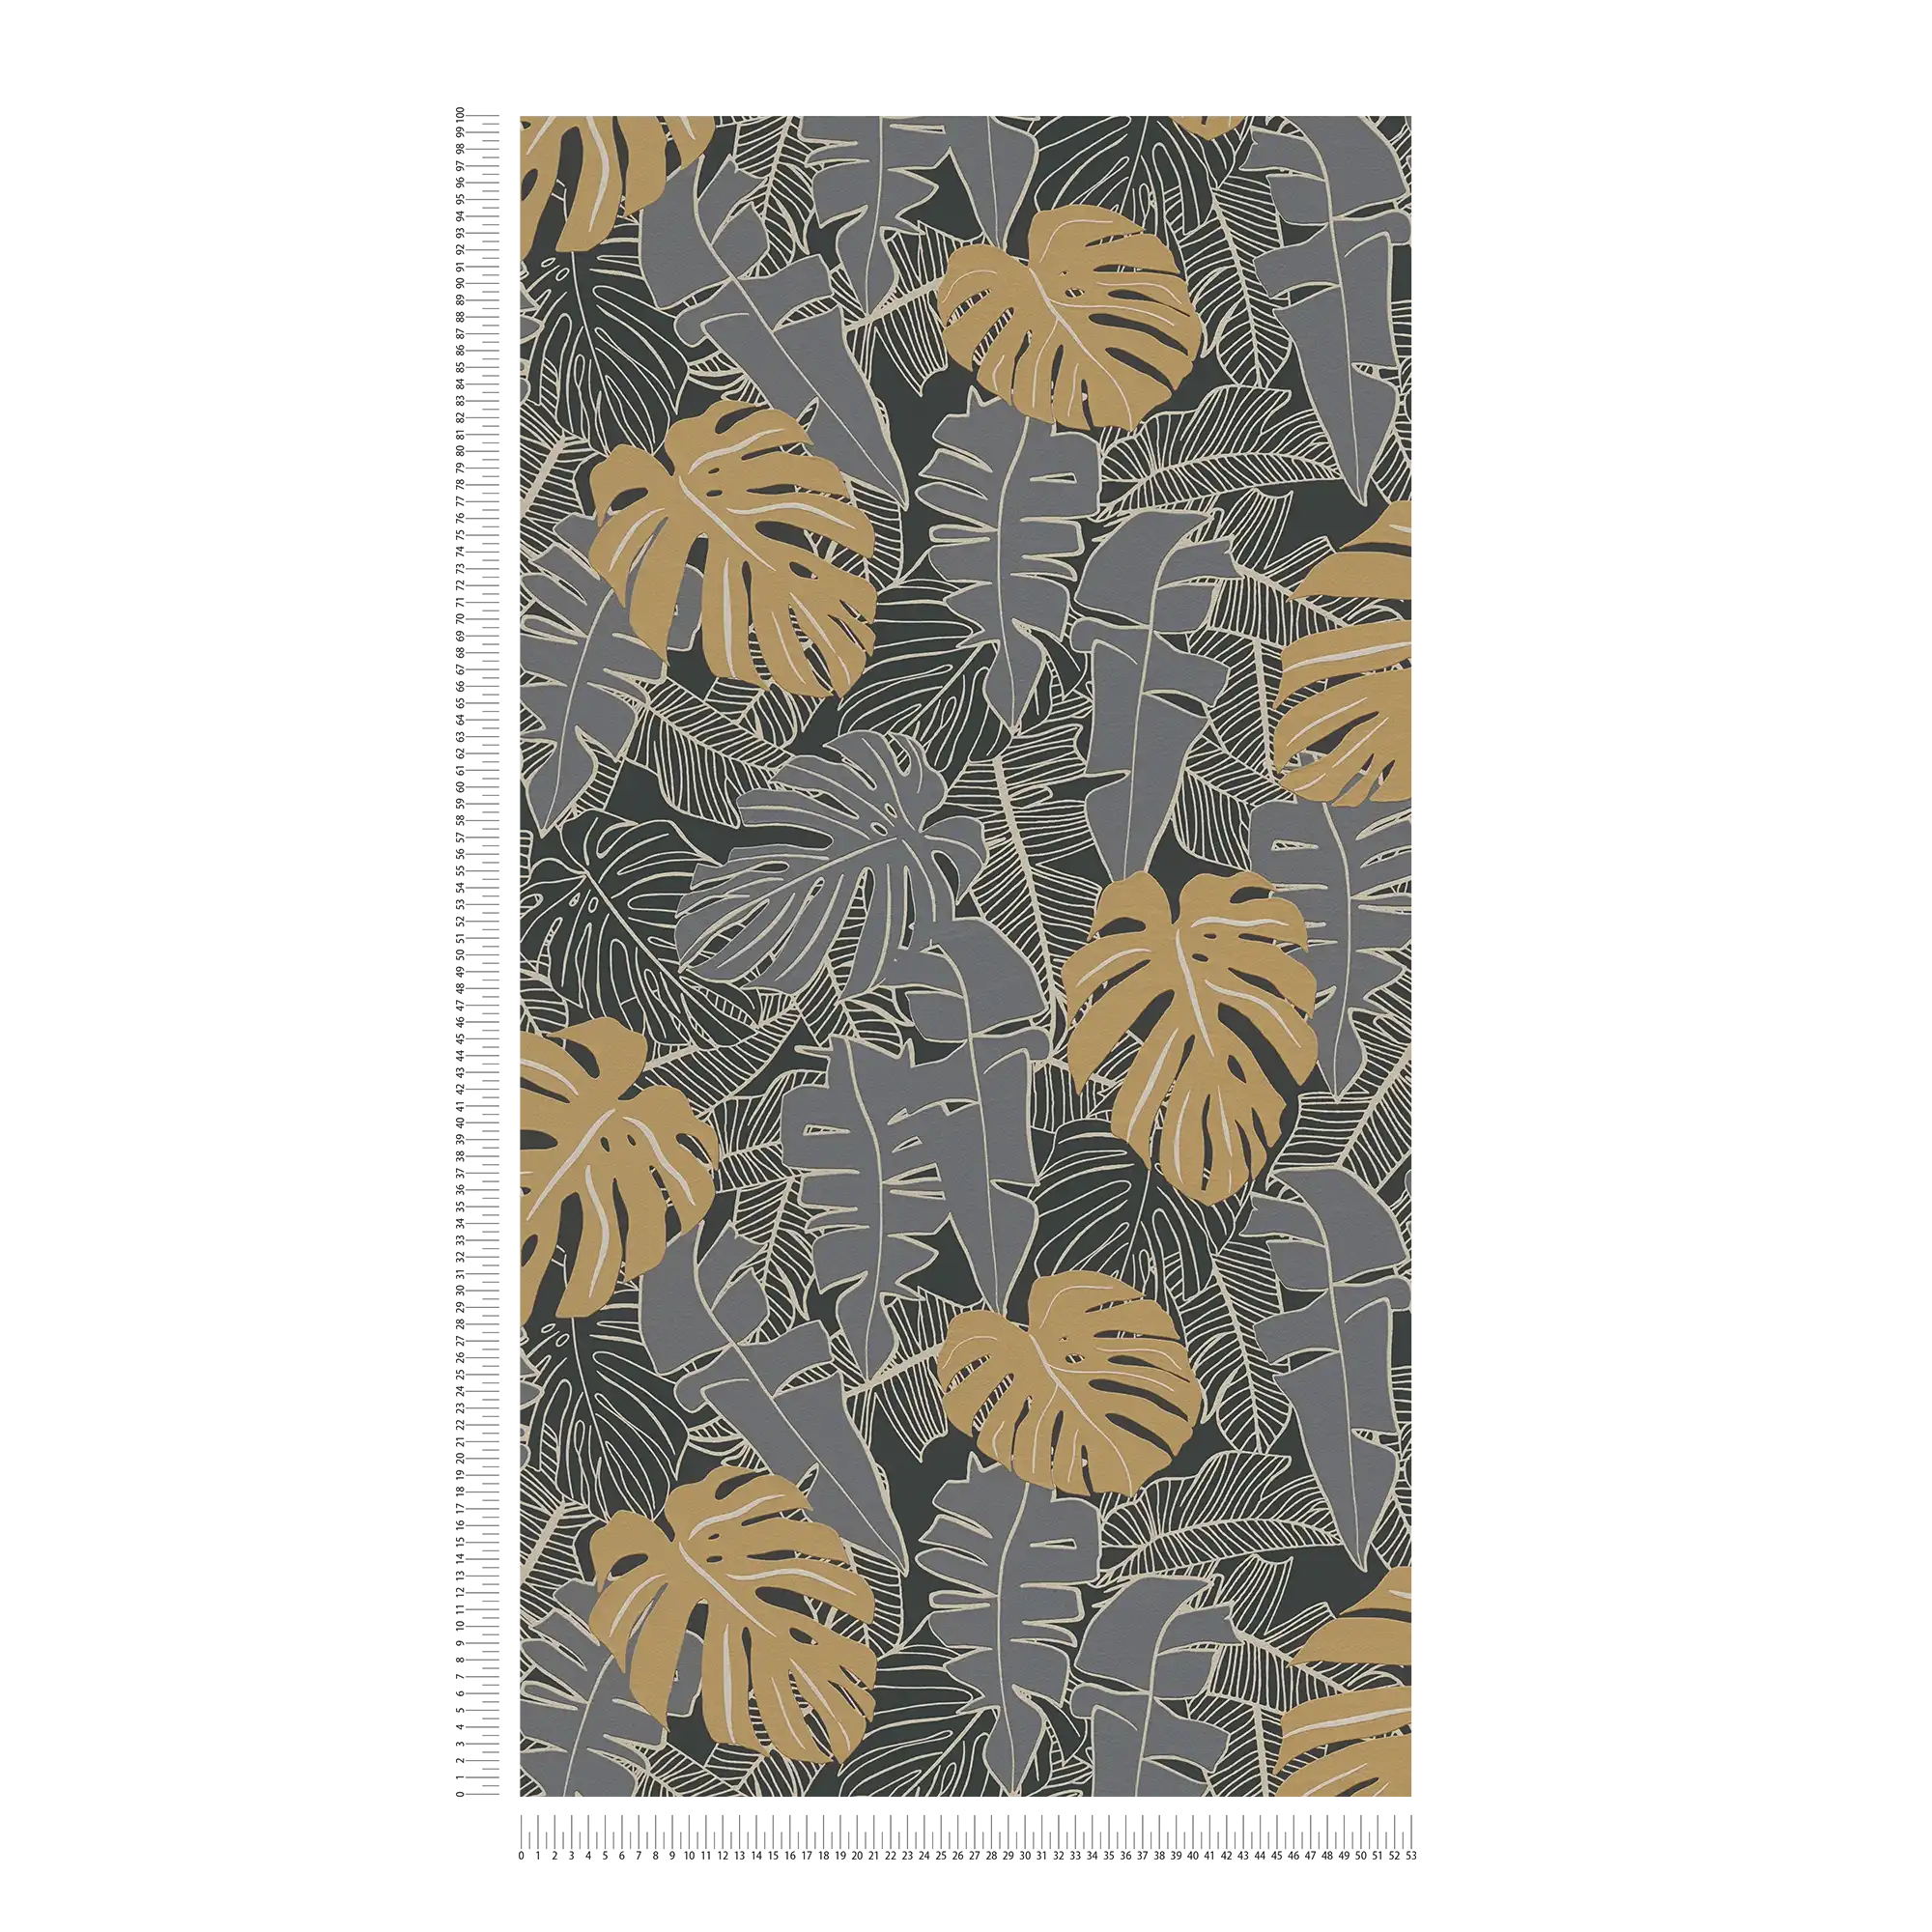             Jungle wallpaper with banana leaves & metallic look - black, gold, grey
        